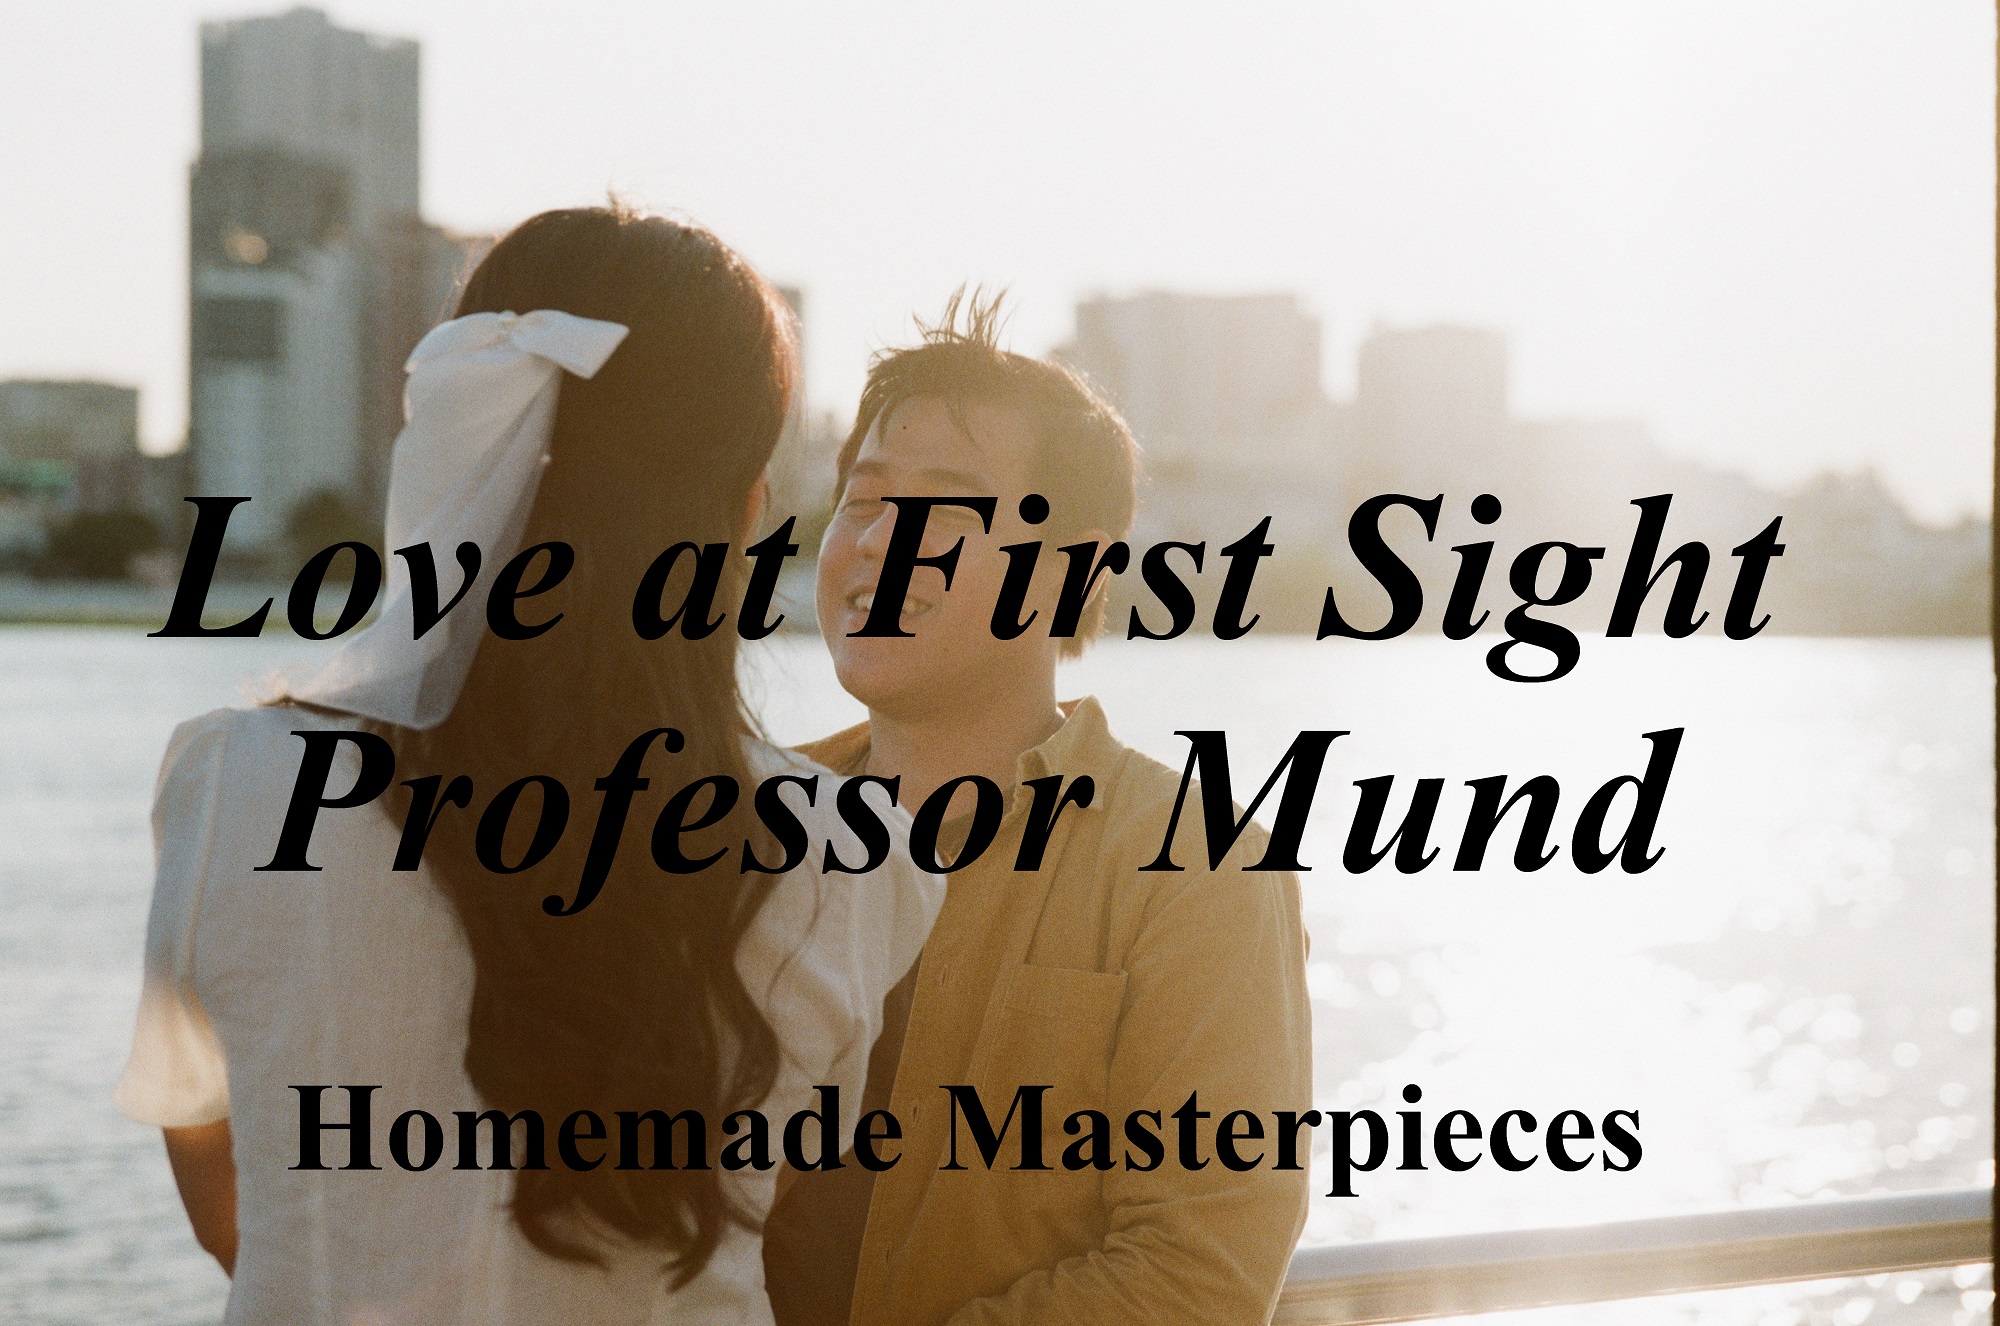 Love at First Sight Professor Mund